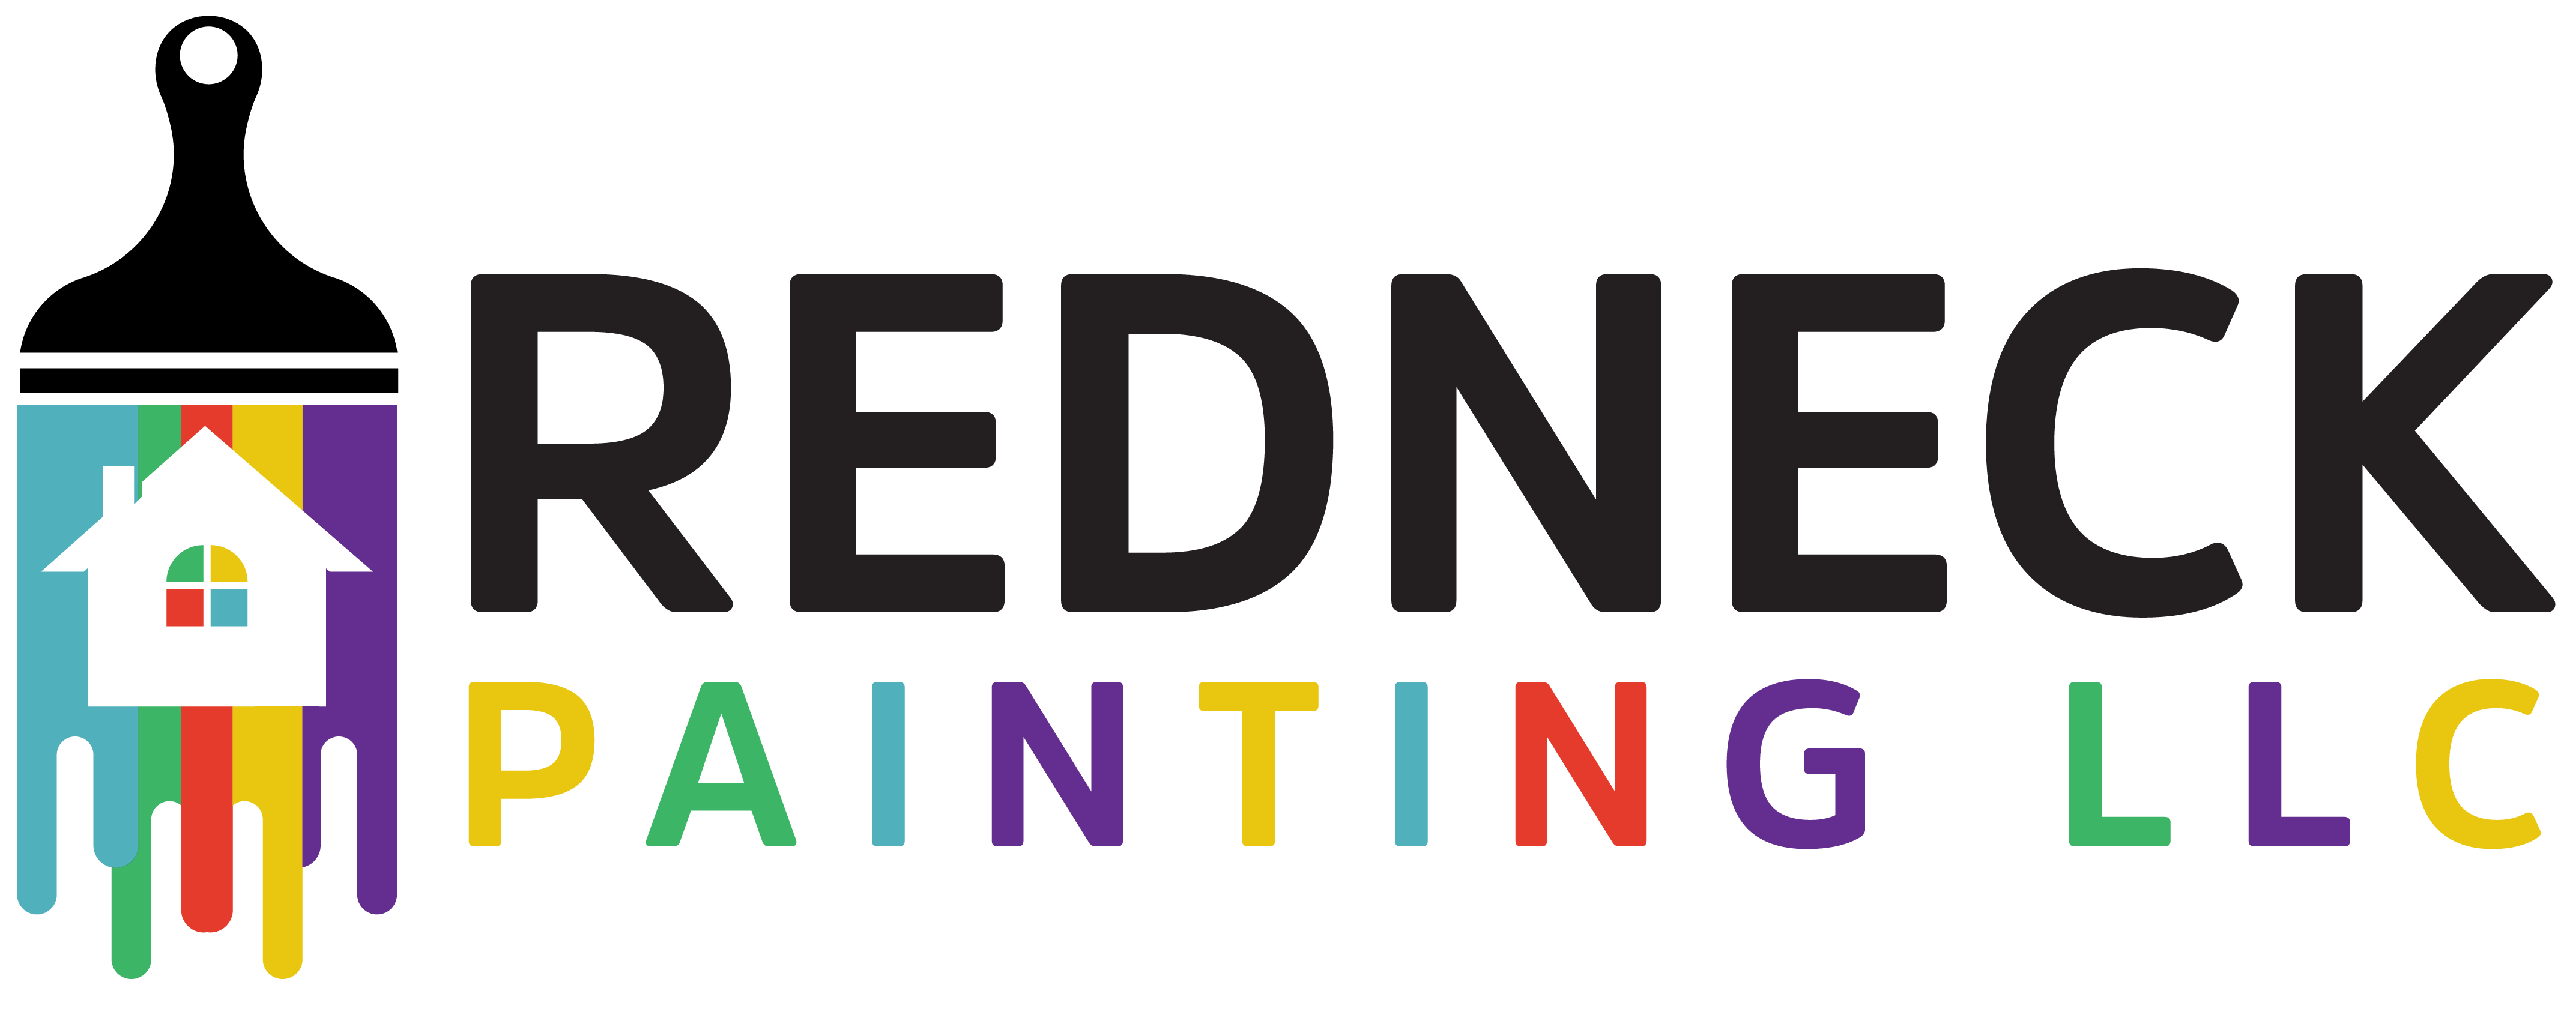 Redneck painting-logo